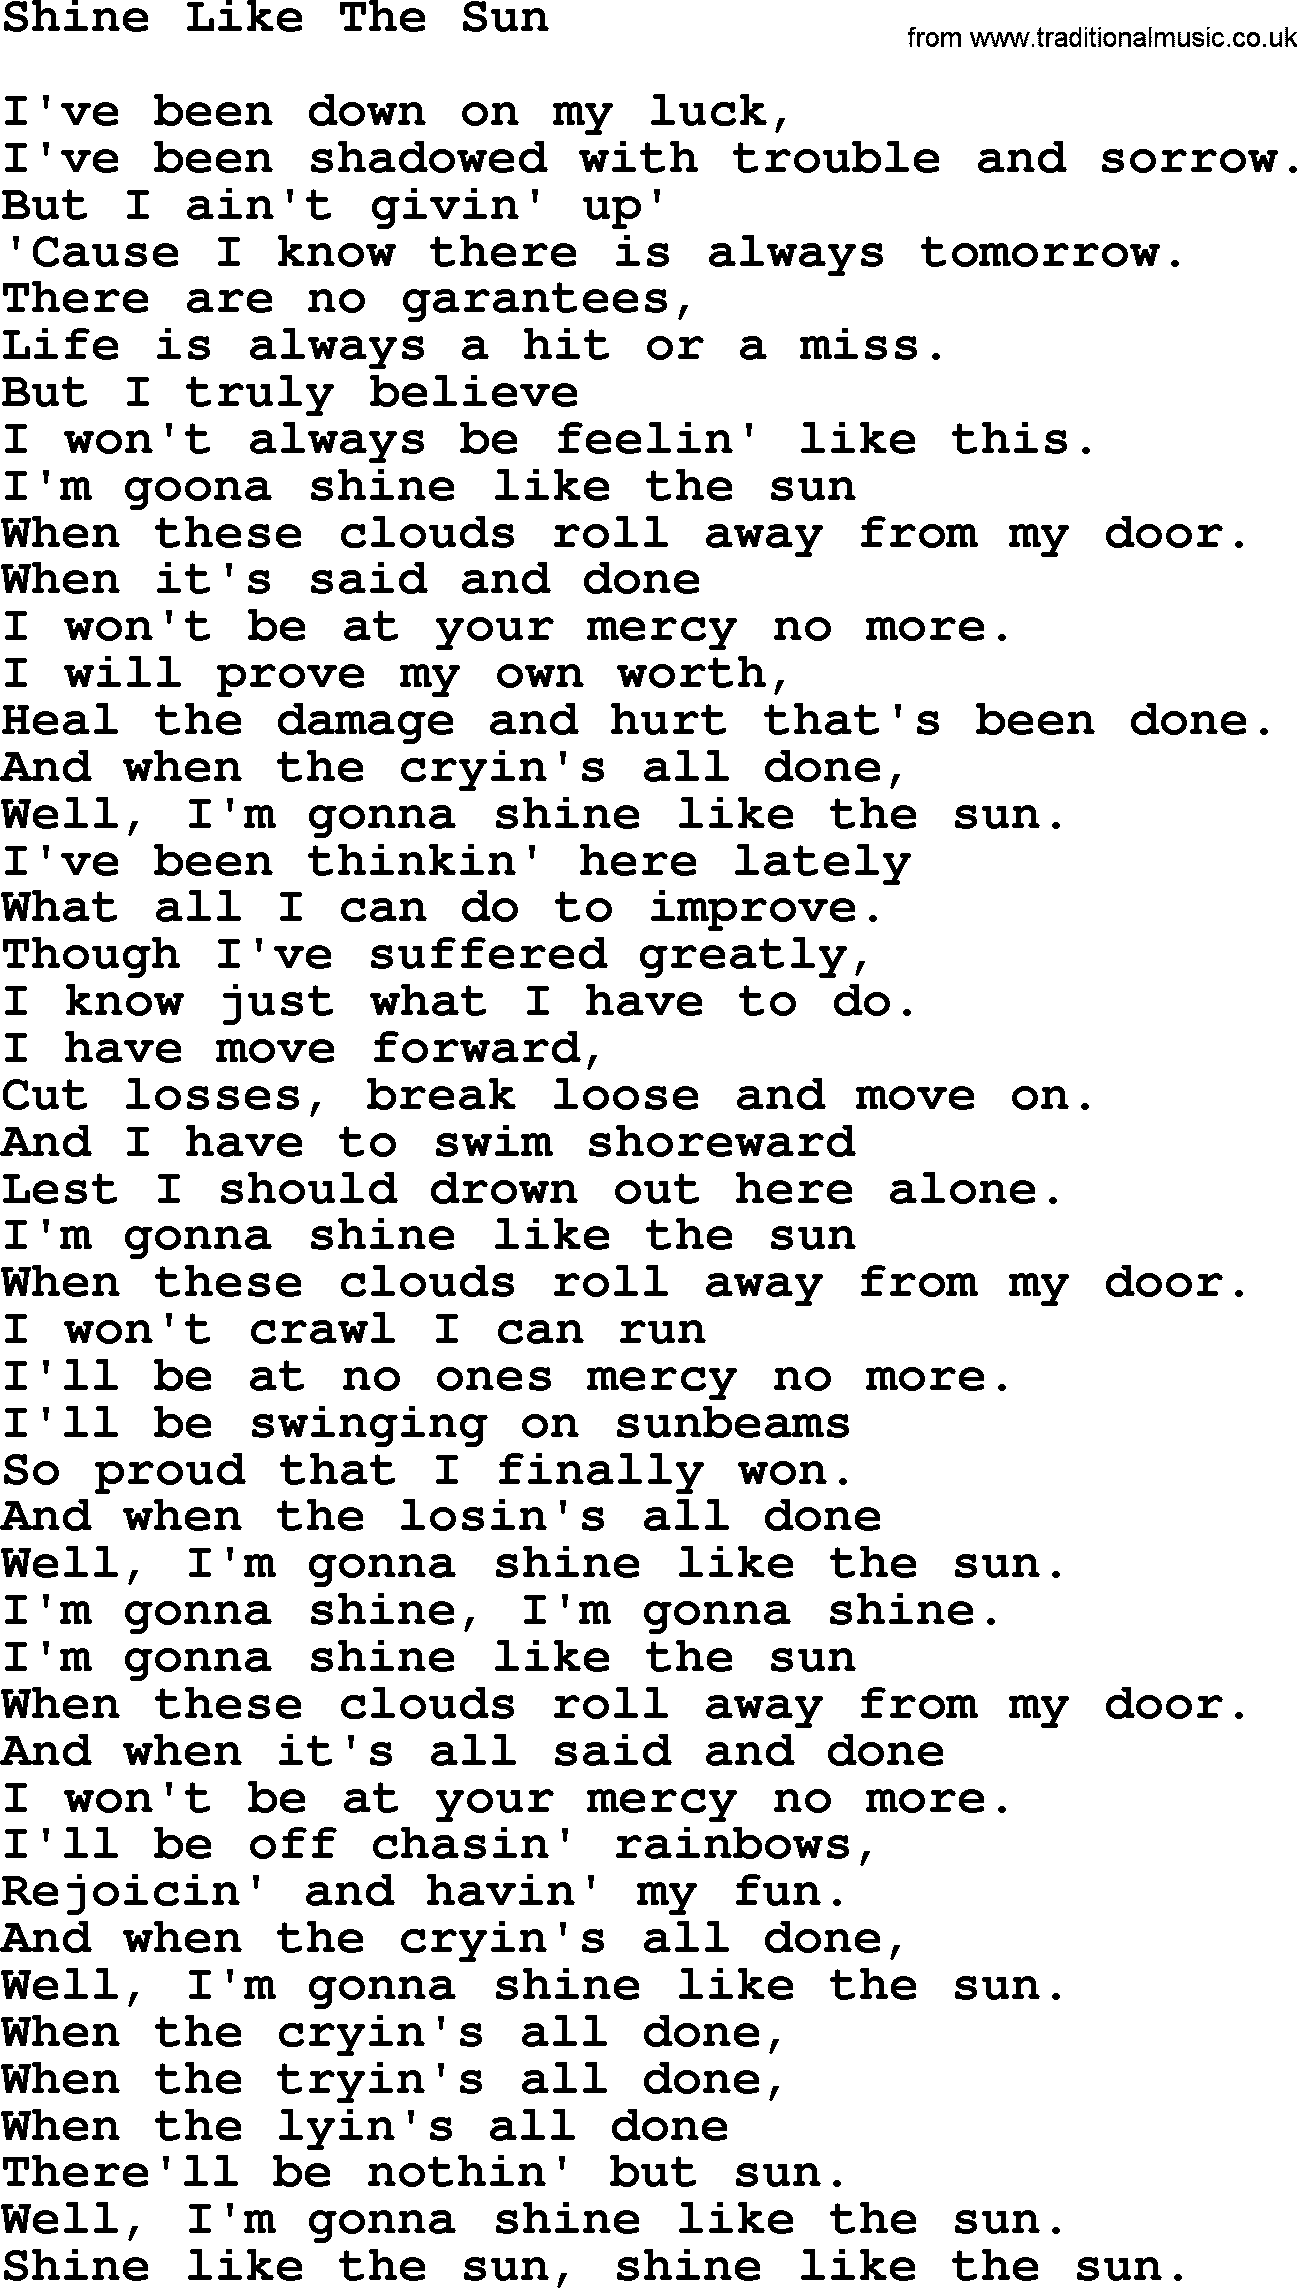 Dolly Parton song Shine Like The Sun.txt lyrics